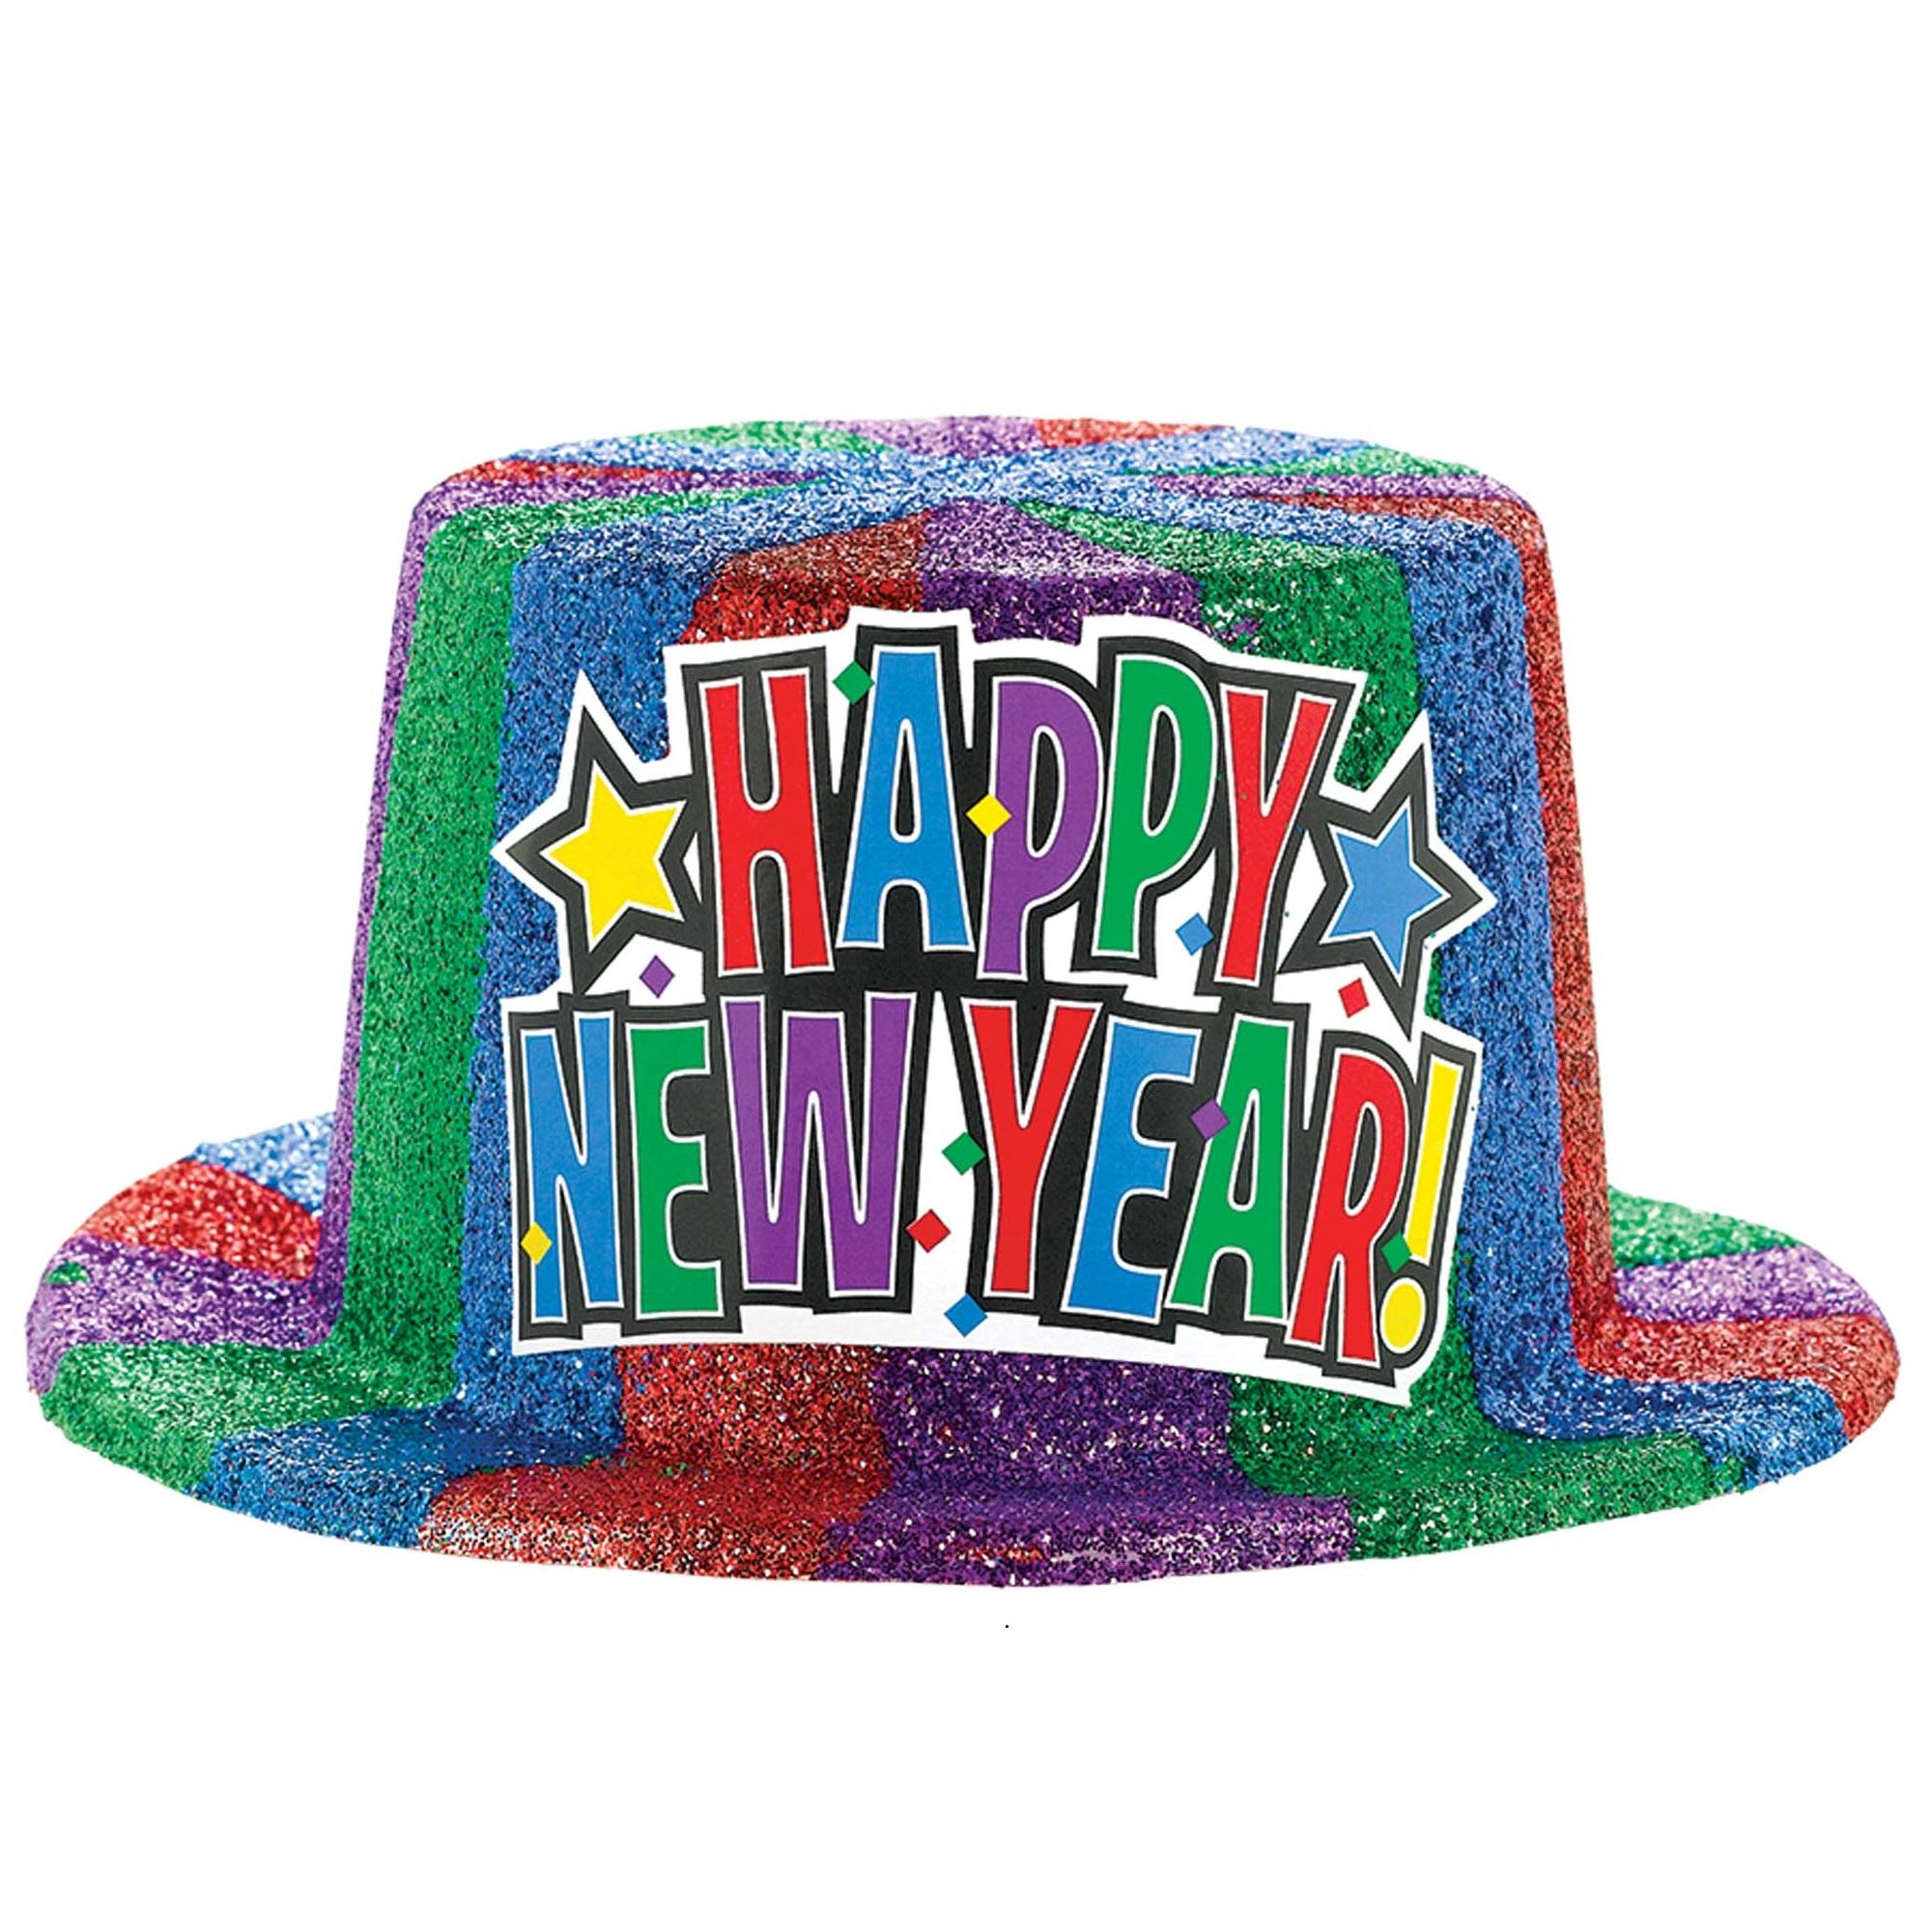 Glitter Top Hat New Year Jewel Tone Glitter Plastic Costumes & Apparel - Party Centre